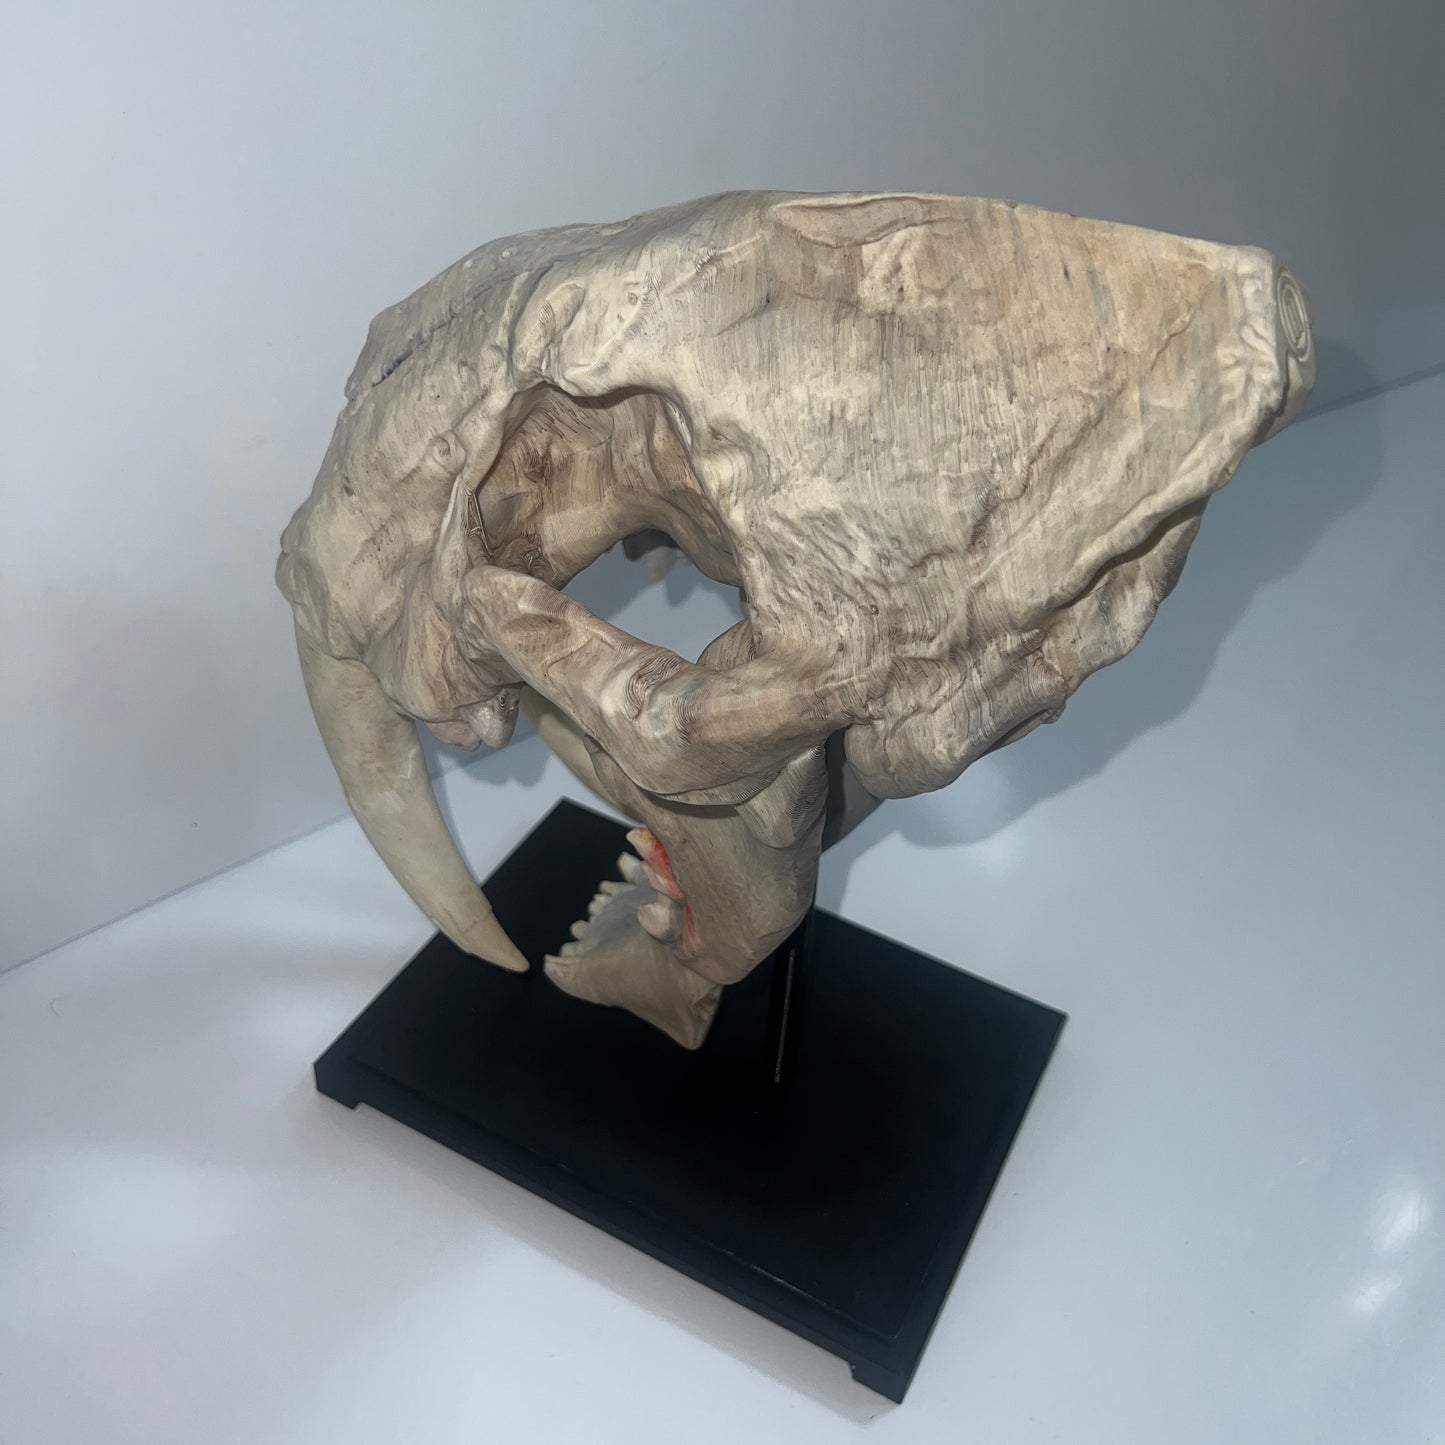 Sabertooth Cat (Smilodon) - 3D Printed